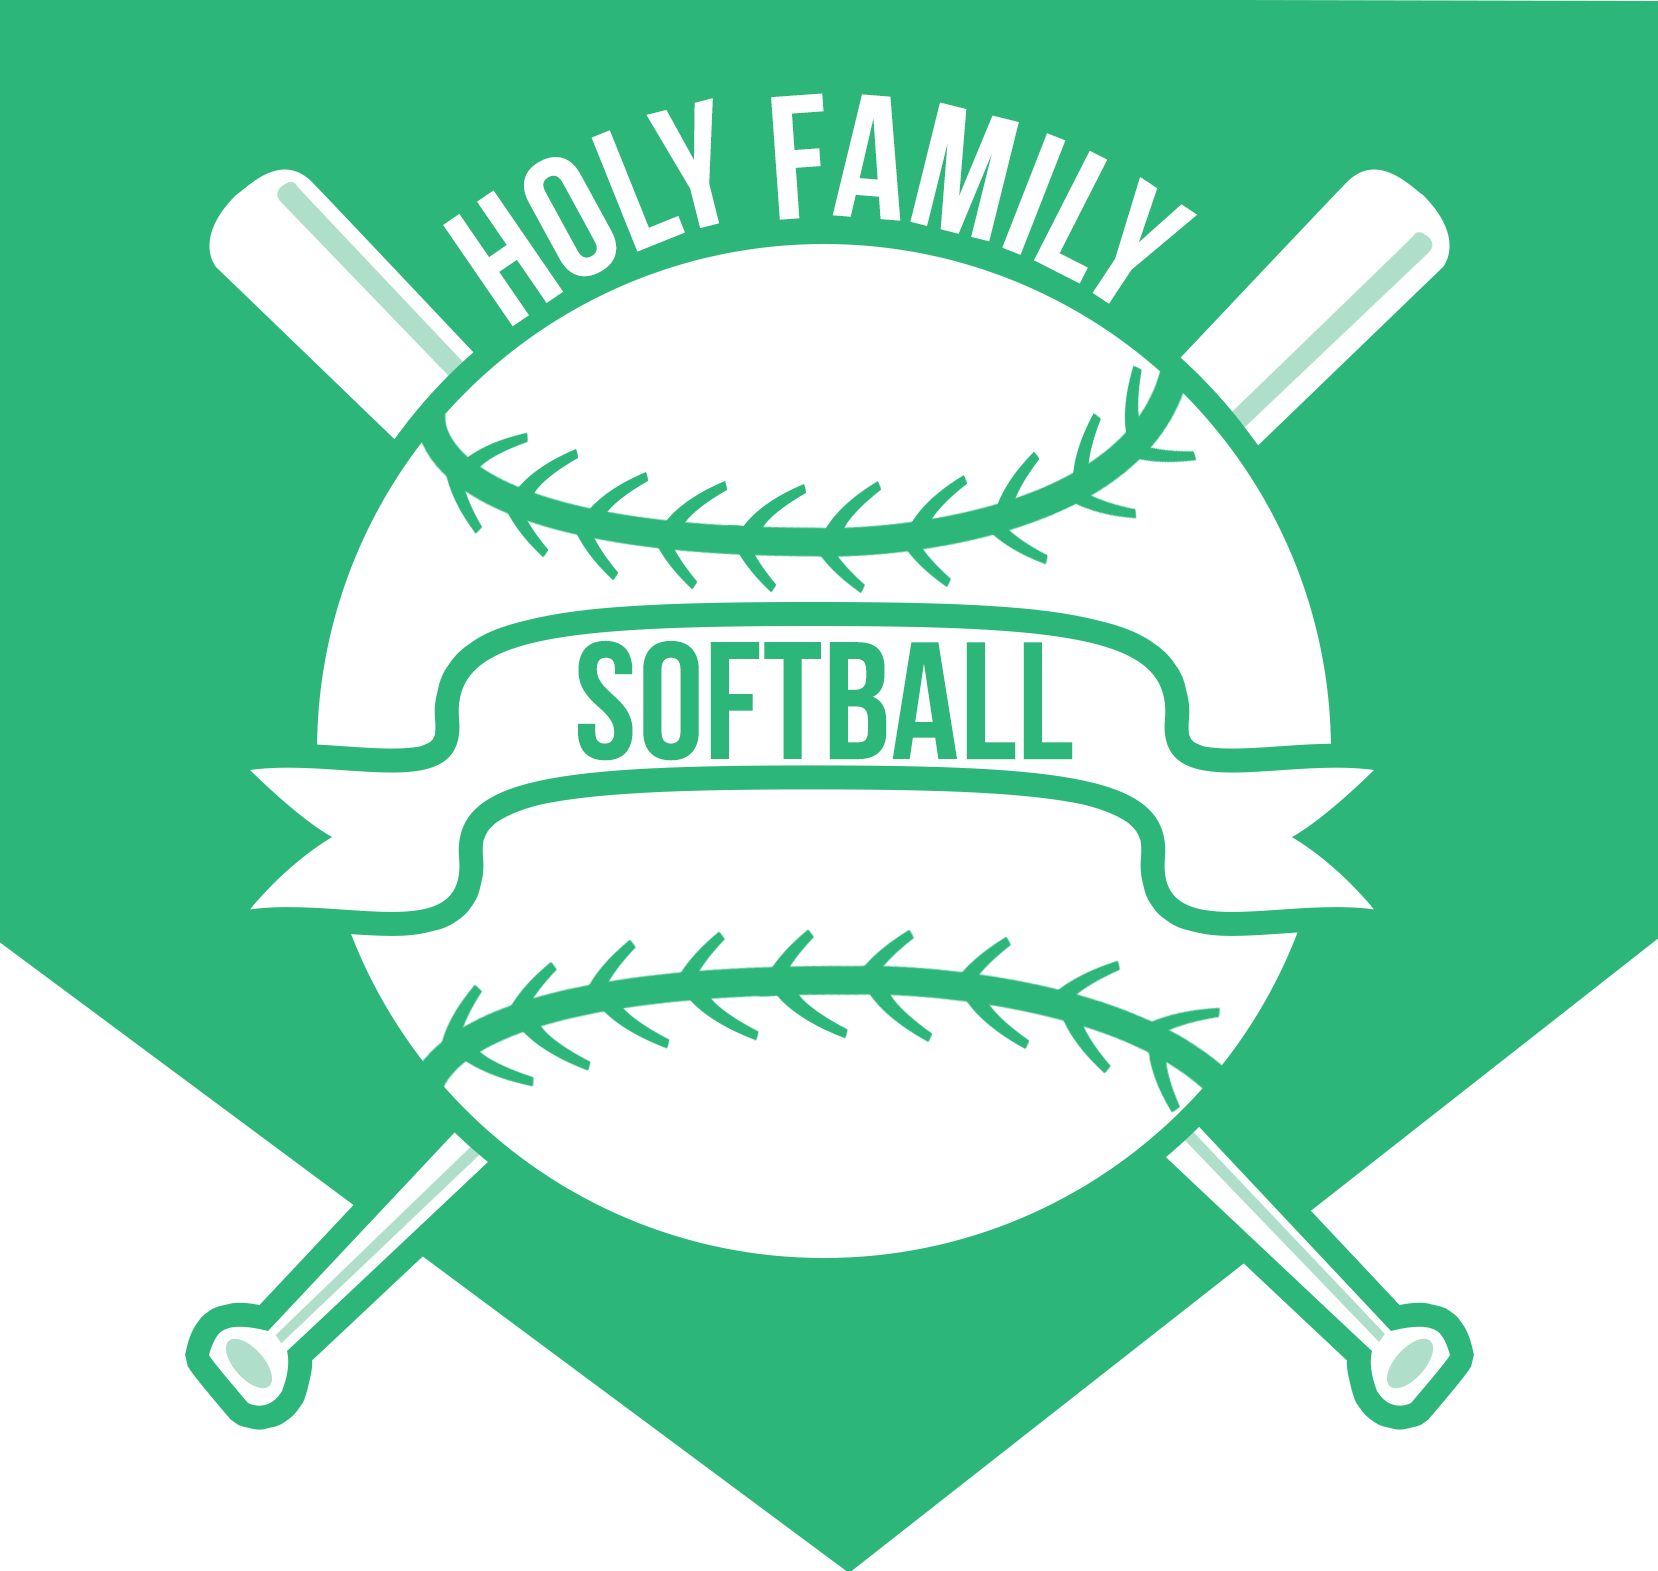 Cool Softball Logo - Softball. Church of the Holy Family